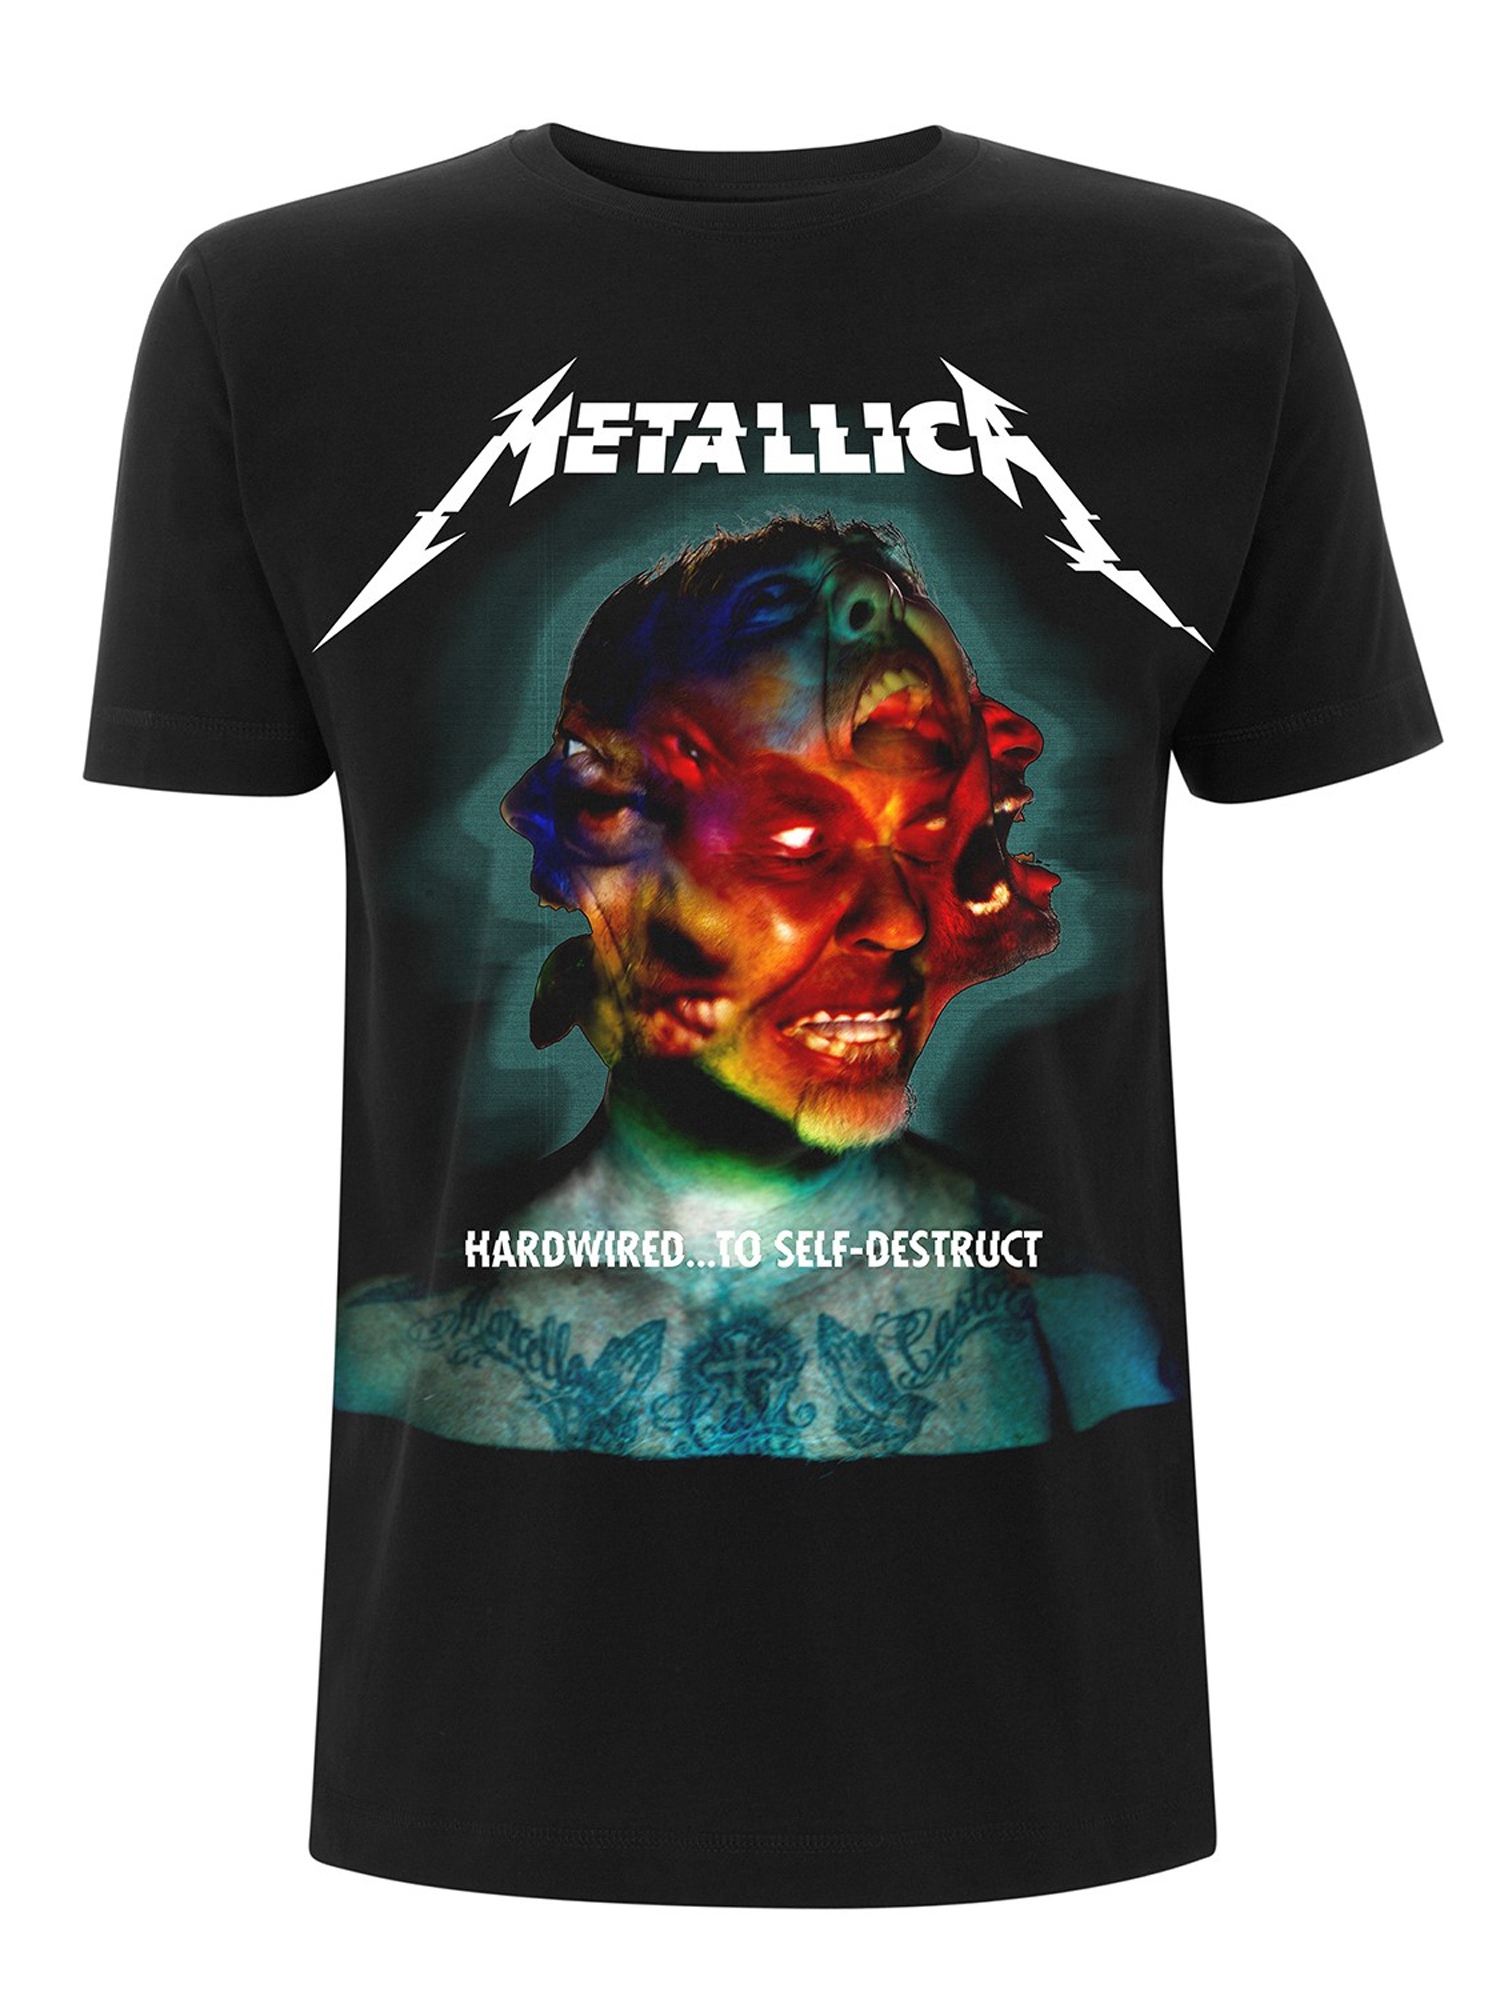 Metallica Hardwired to Self Destruct Album Licensed Tee T-Shirt Men | eBay